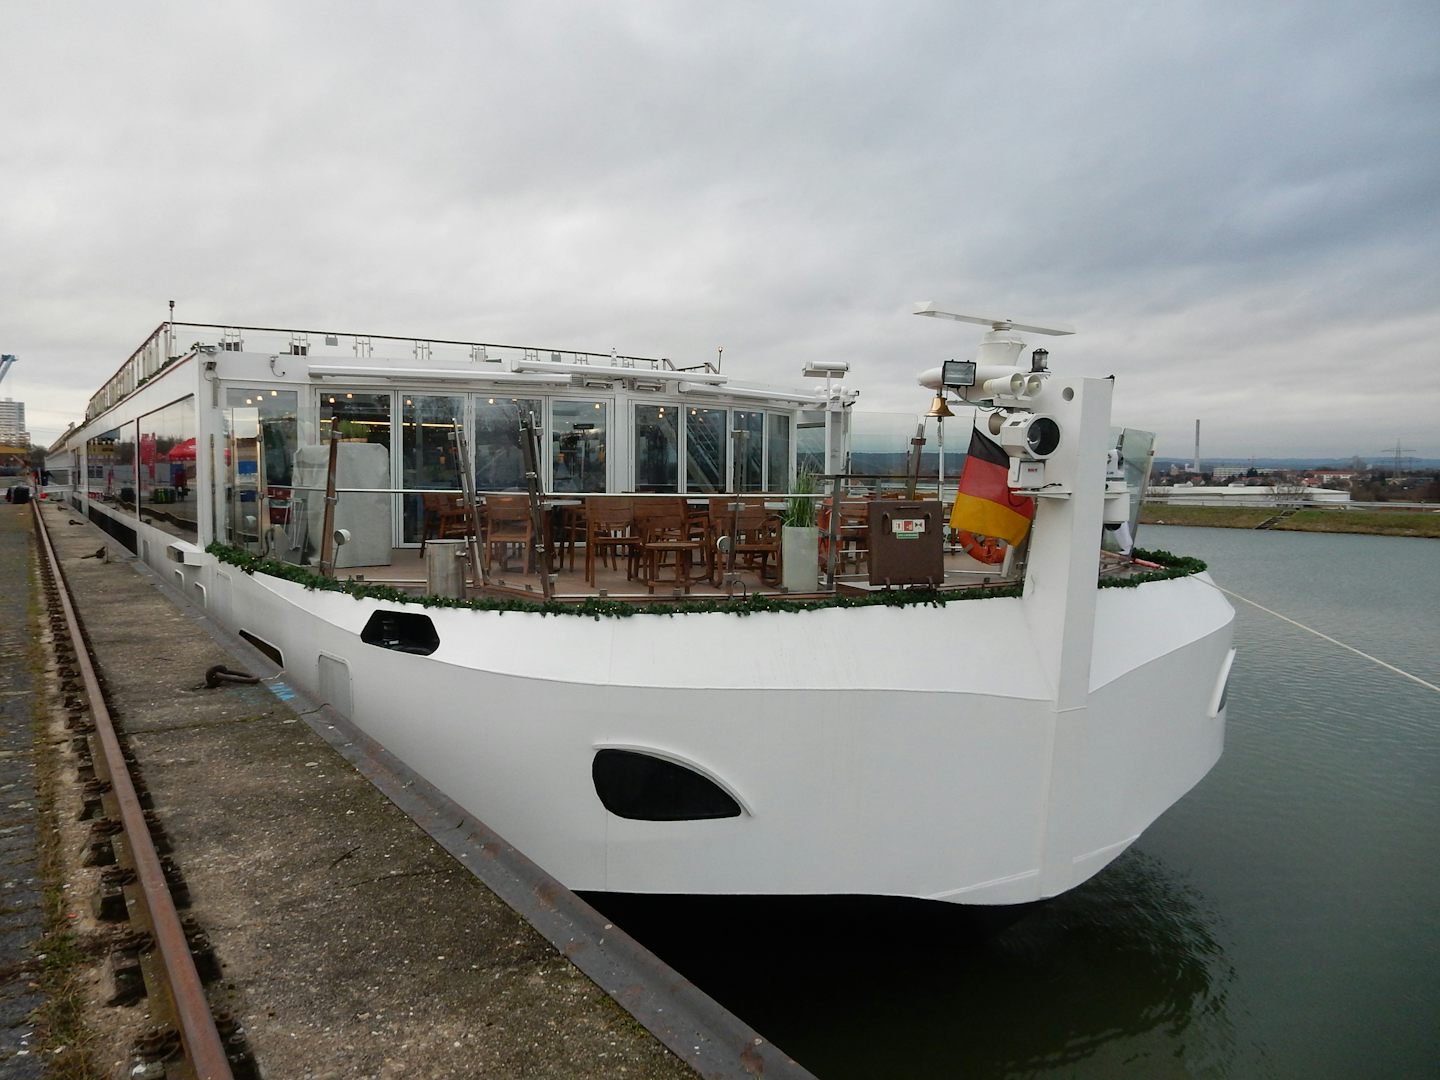 The Jarl docked at Regensberg.